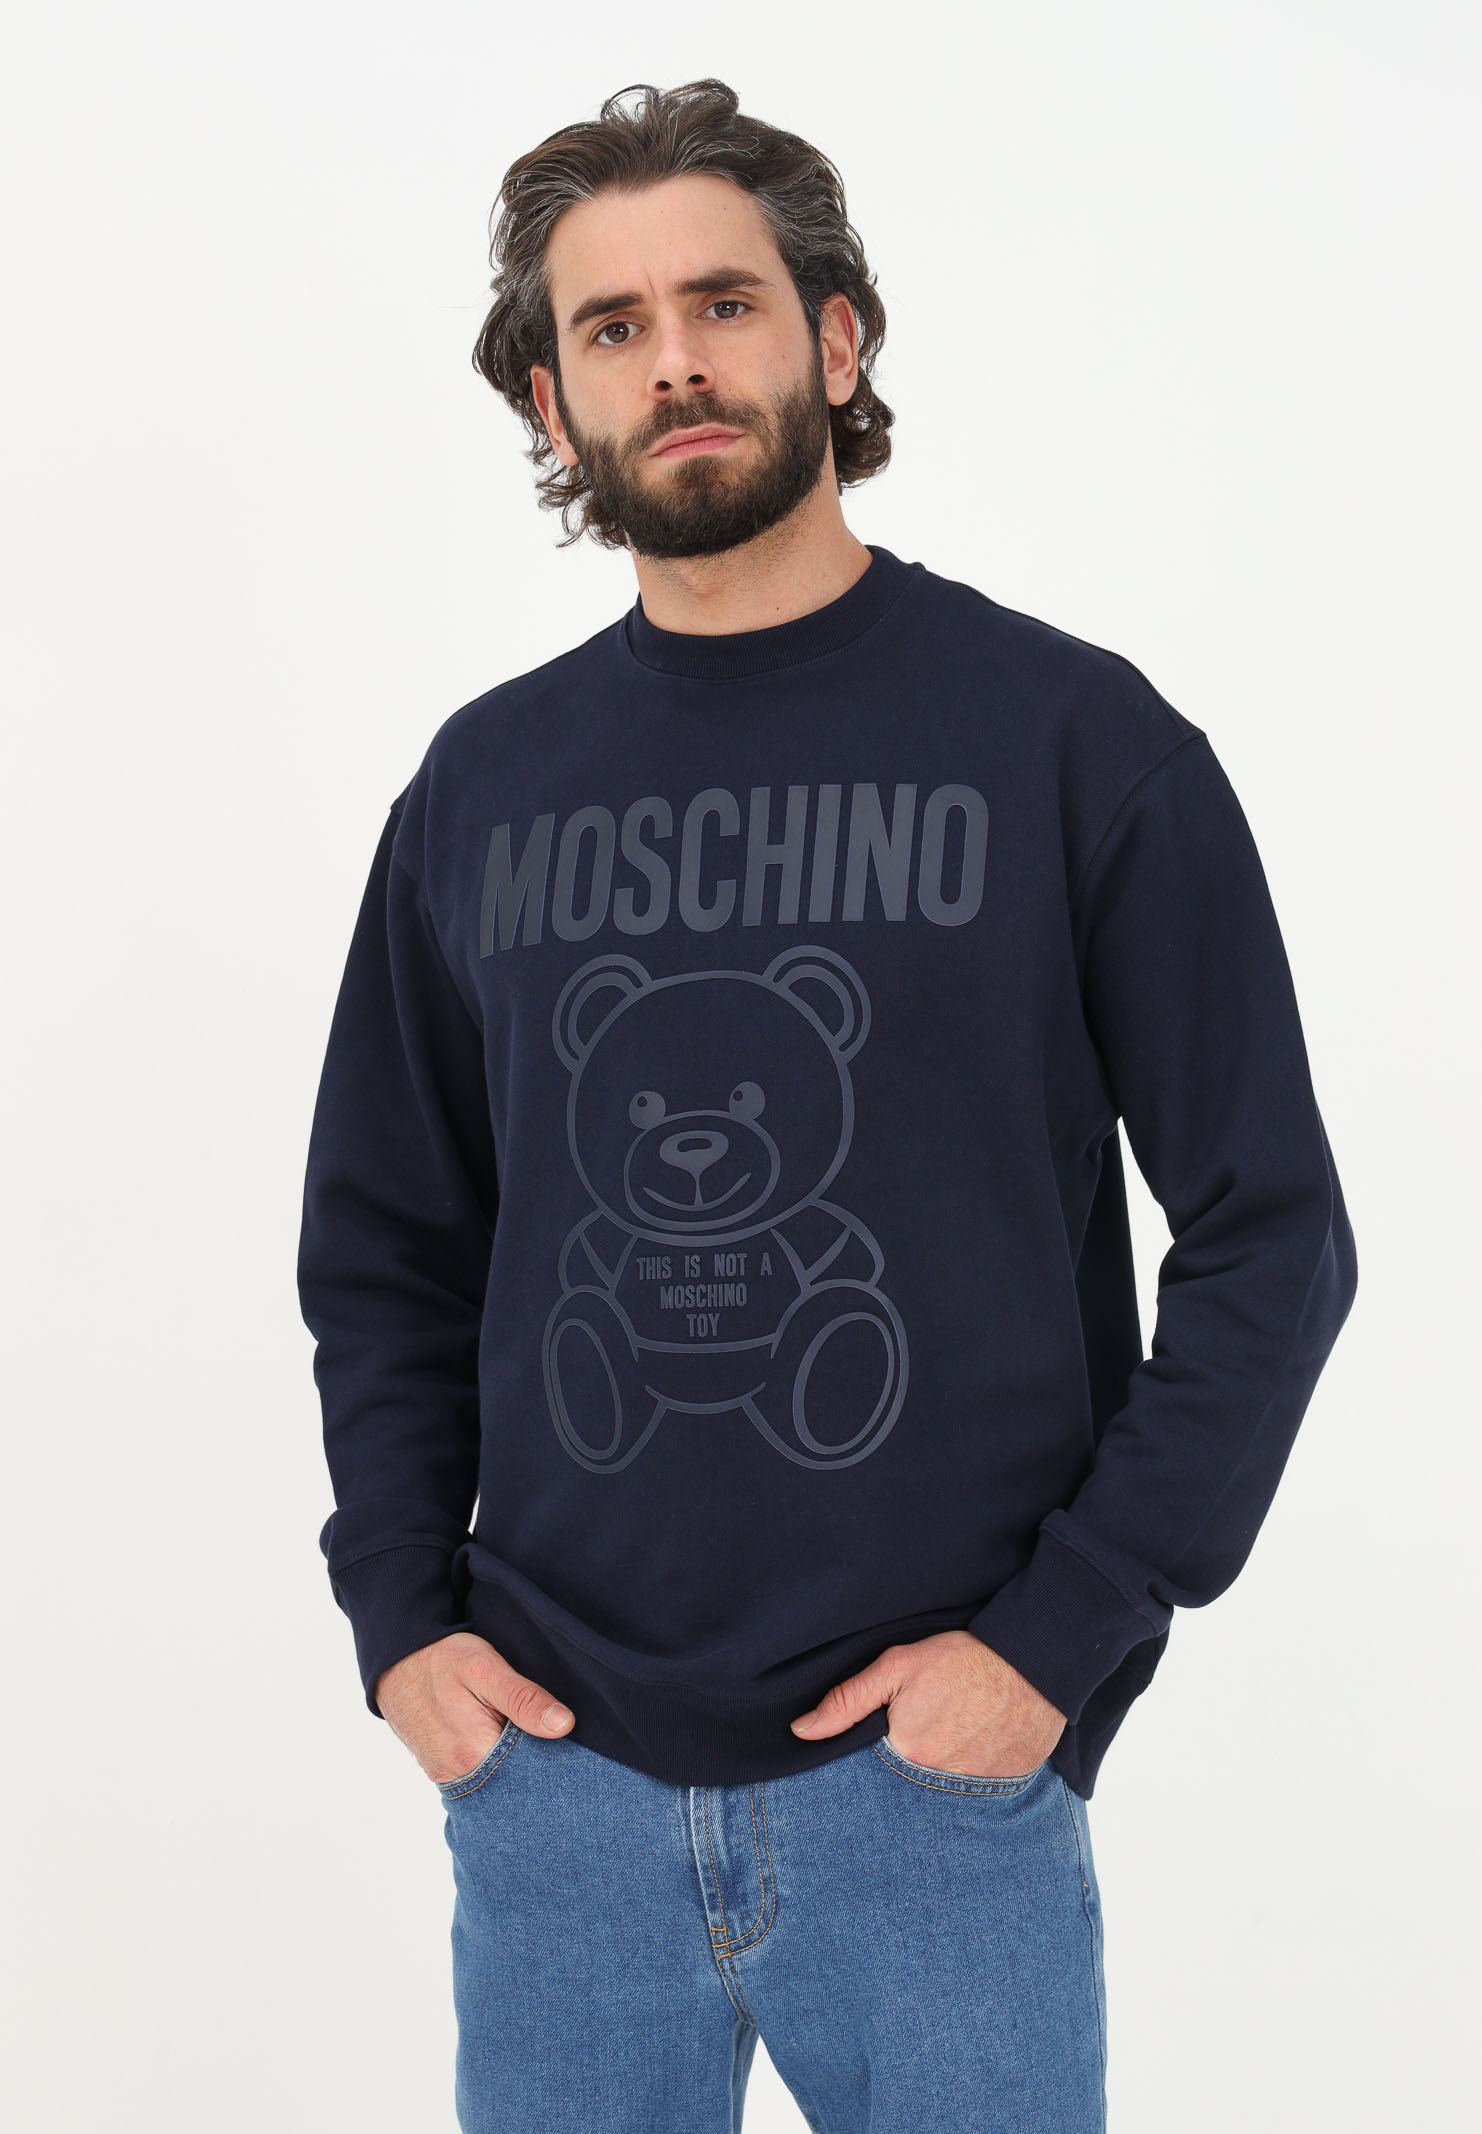 Blue crewneck sweatshirt for men with maxi logo MOSCHINO | 17132028A1290